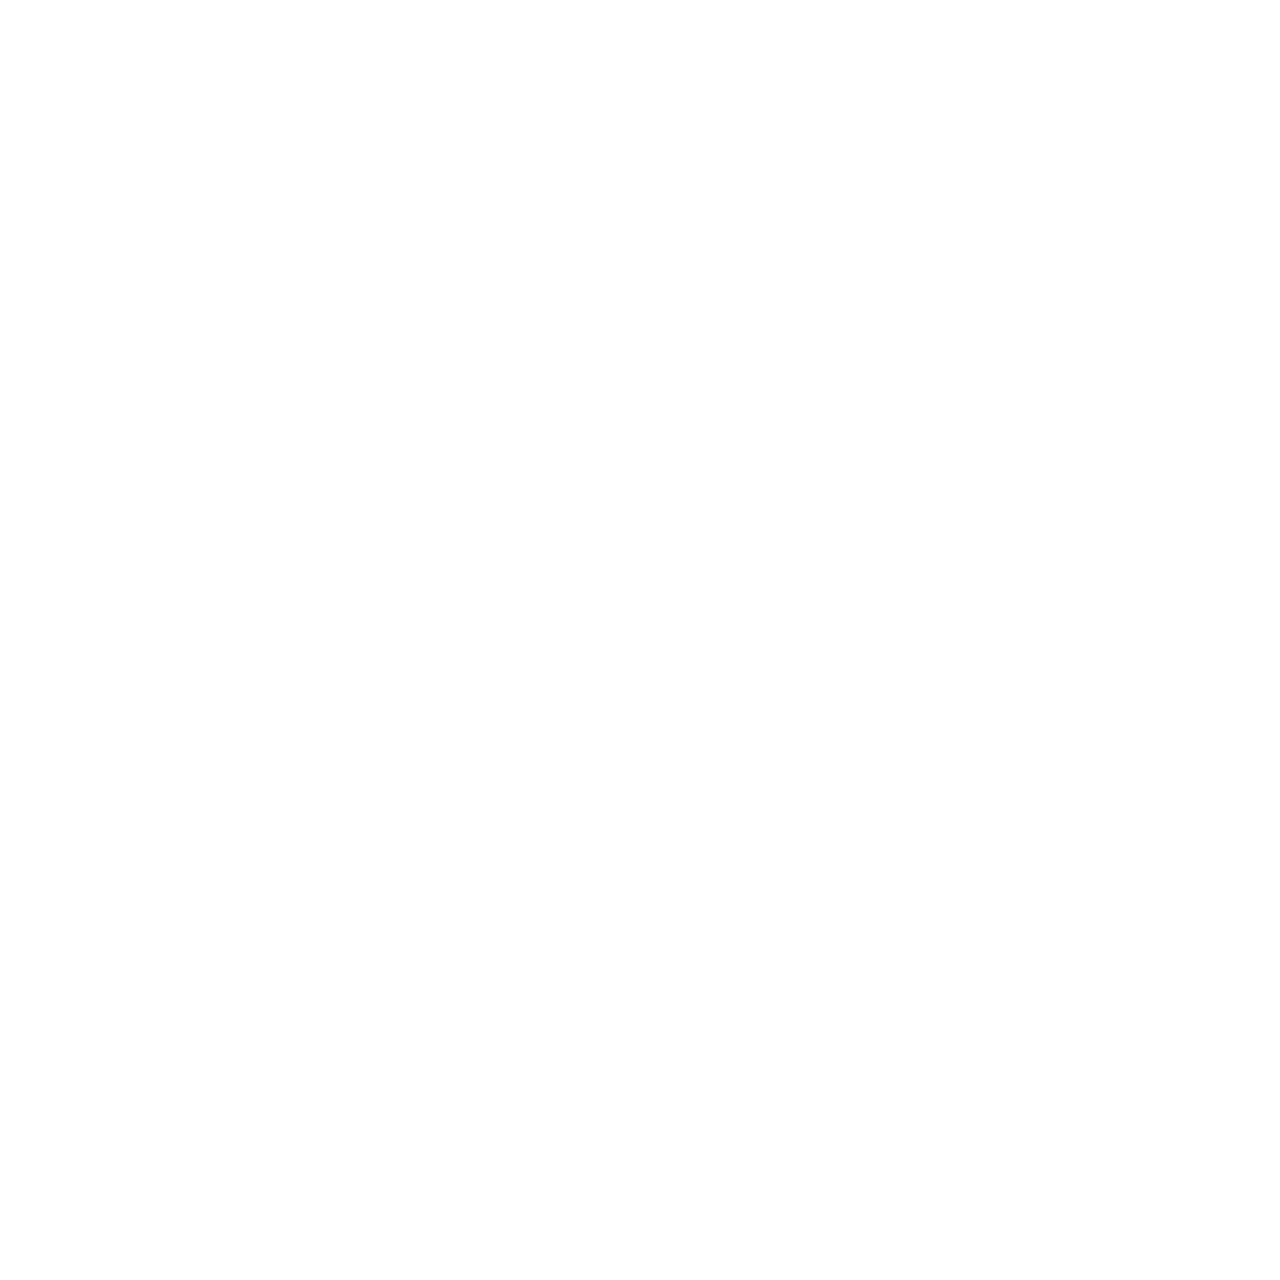 Let's Break UP